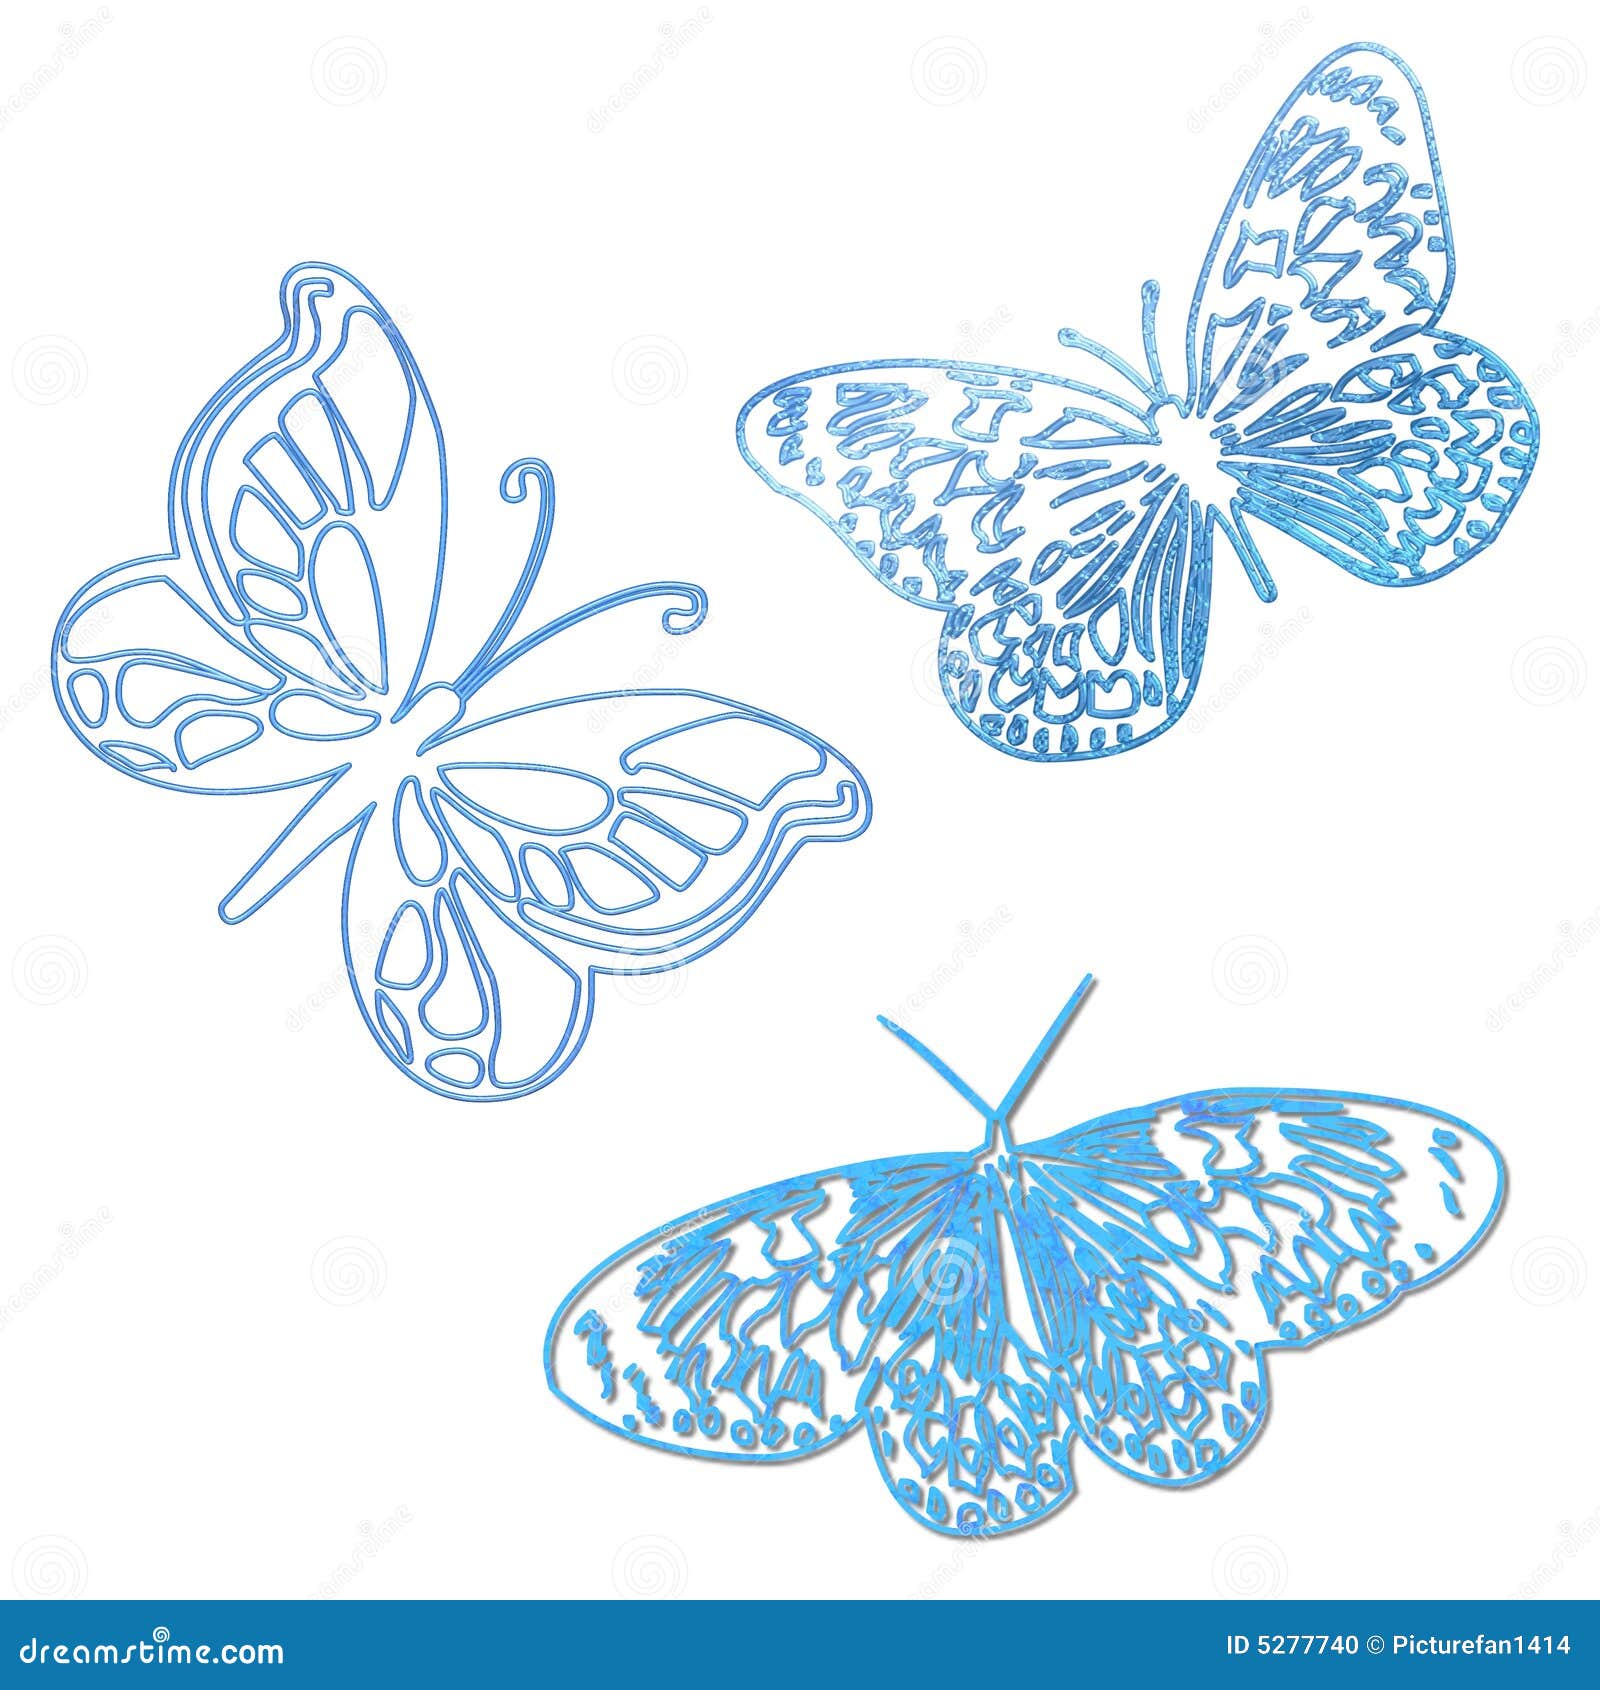 Butterflies outline blue stock illustration. Illustration of ...